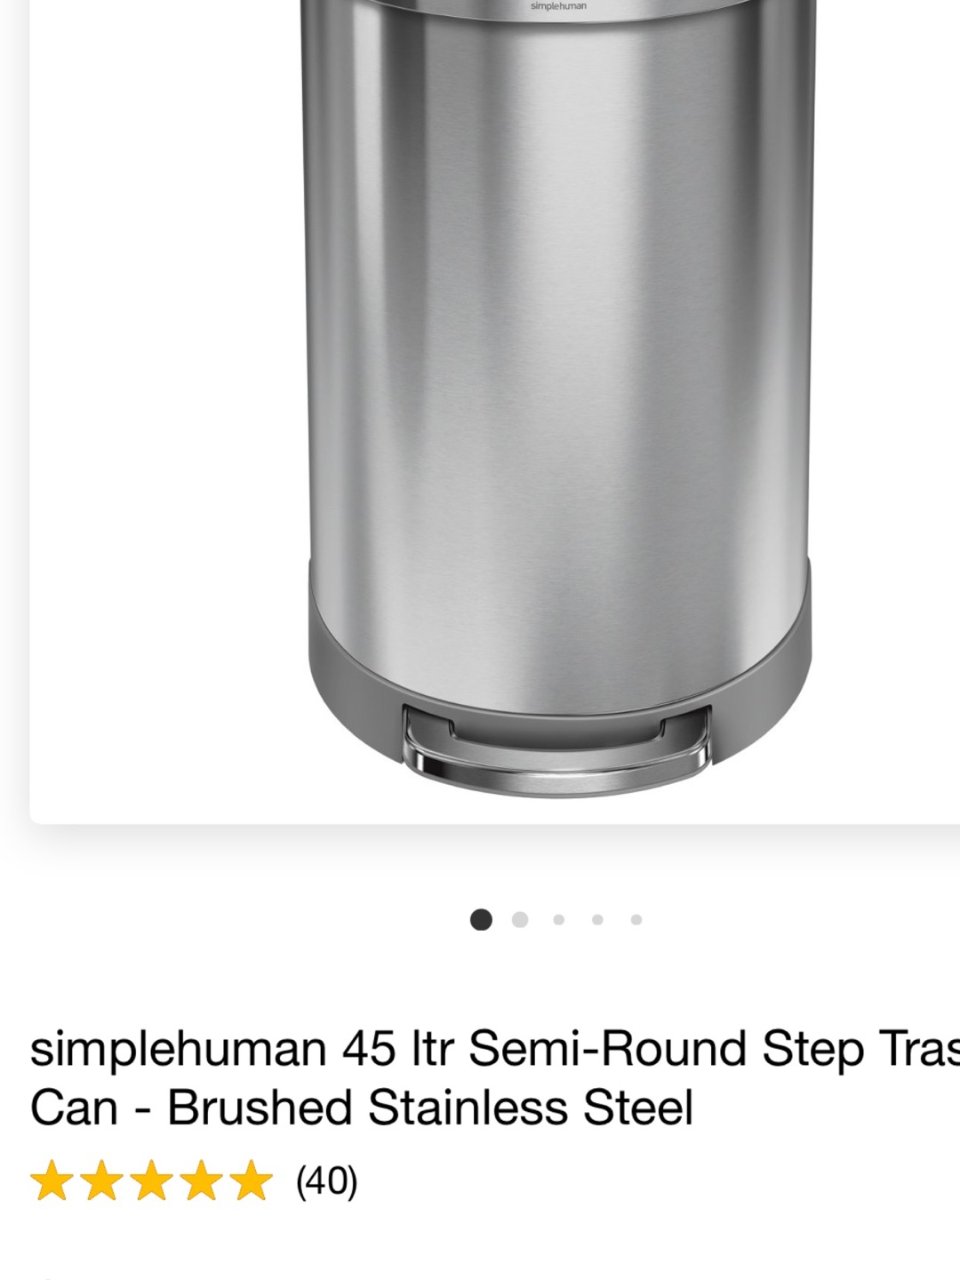 Simplehuman,Target 塔吉特百货,59.99美元